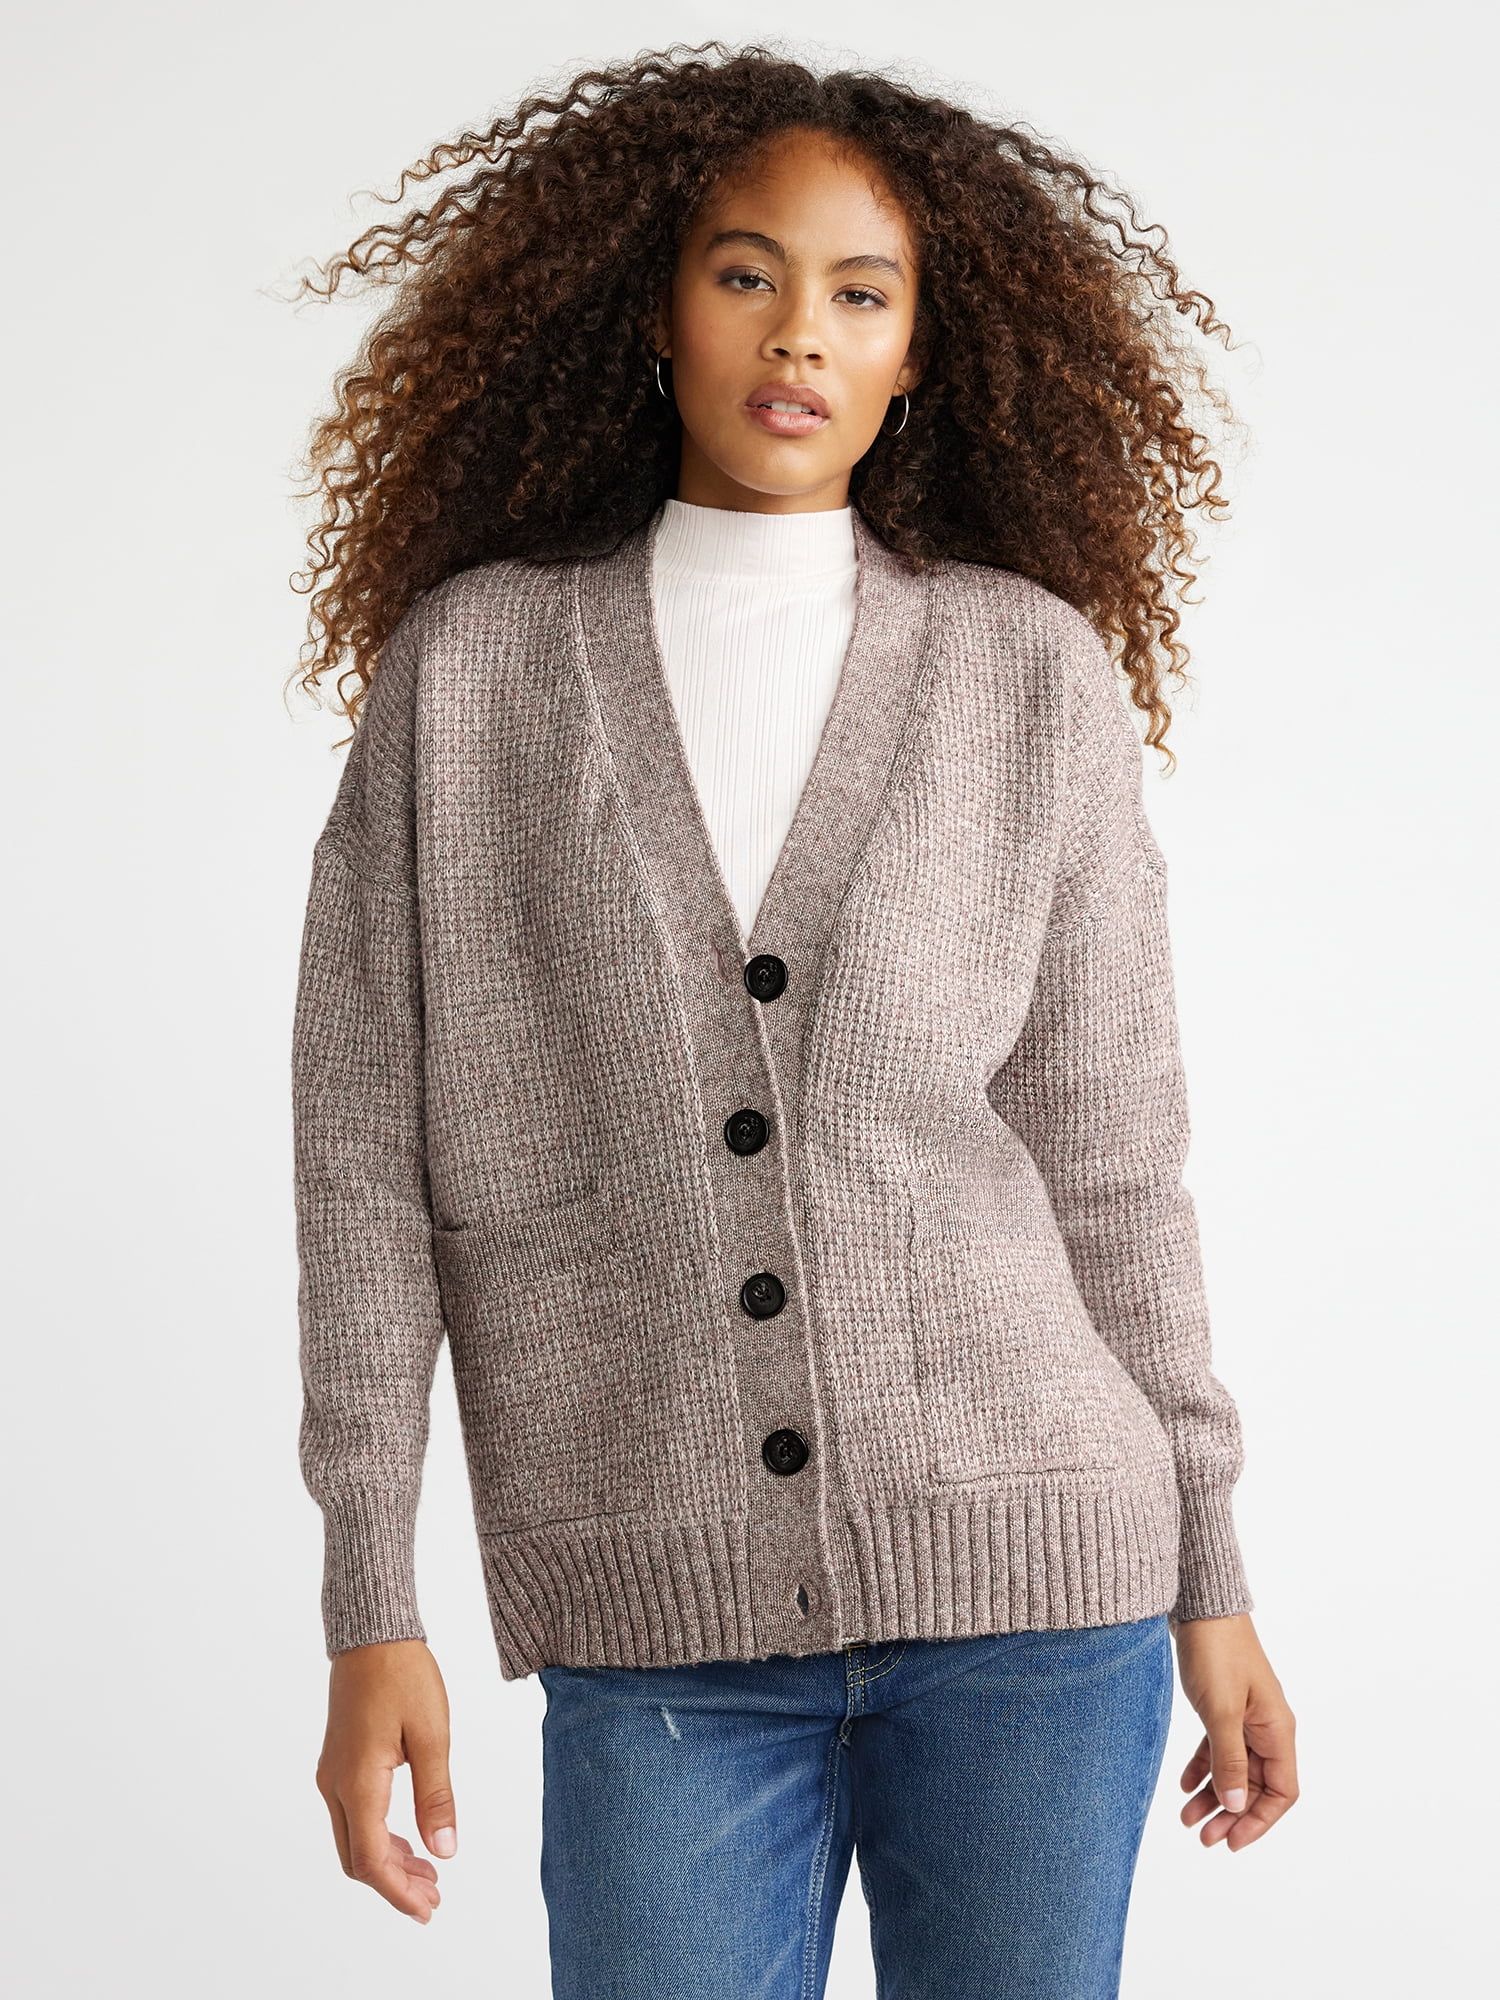 Free Assembly Women's Grandpa Cardigan Sweater with Long Sleeves, Midweight, Sizes XS-XXXL | Walmart (US)